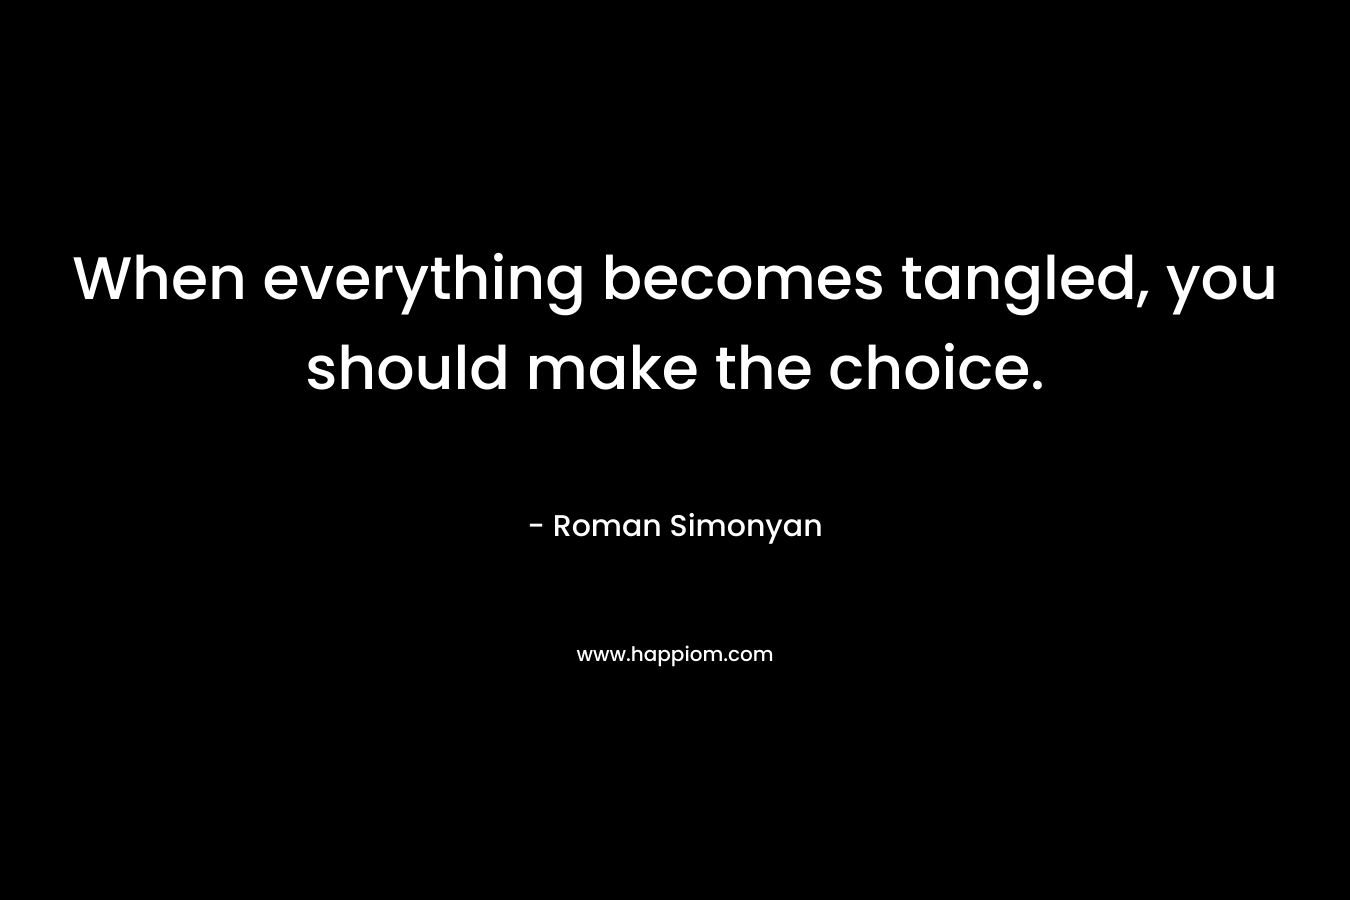 When everything becomes tangled, you should make the choice. – Roman Simonyan